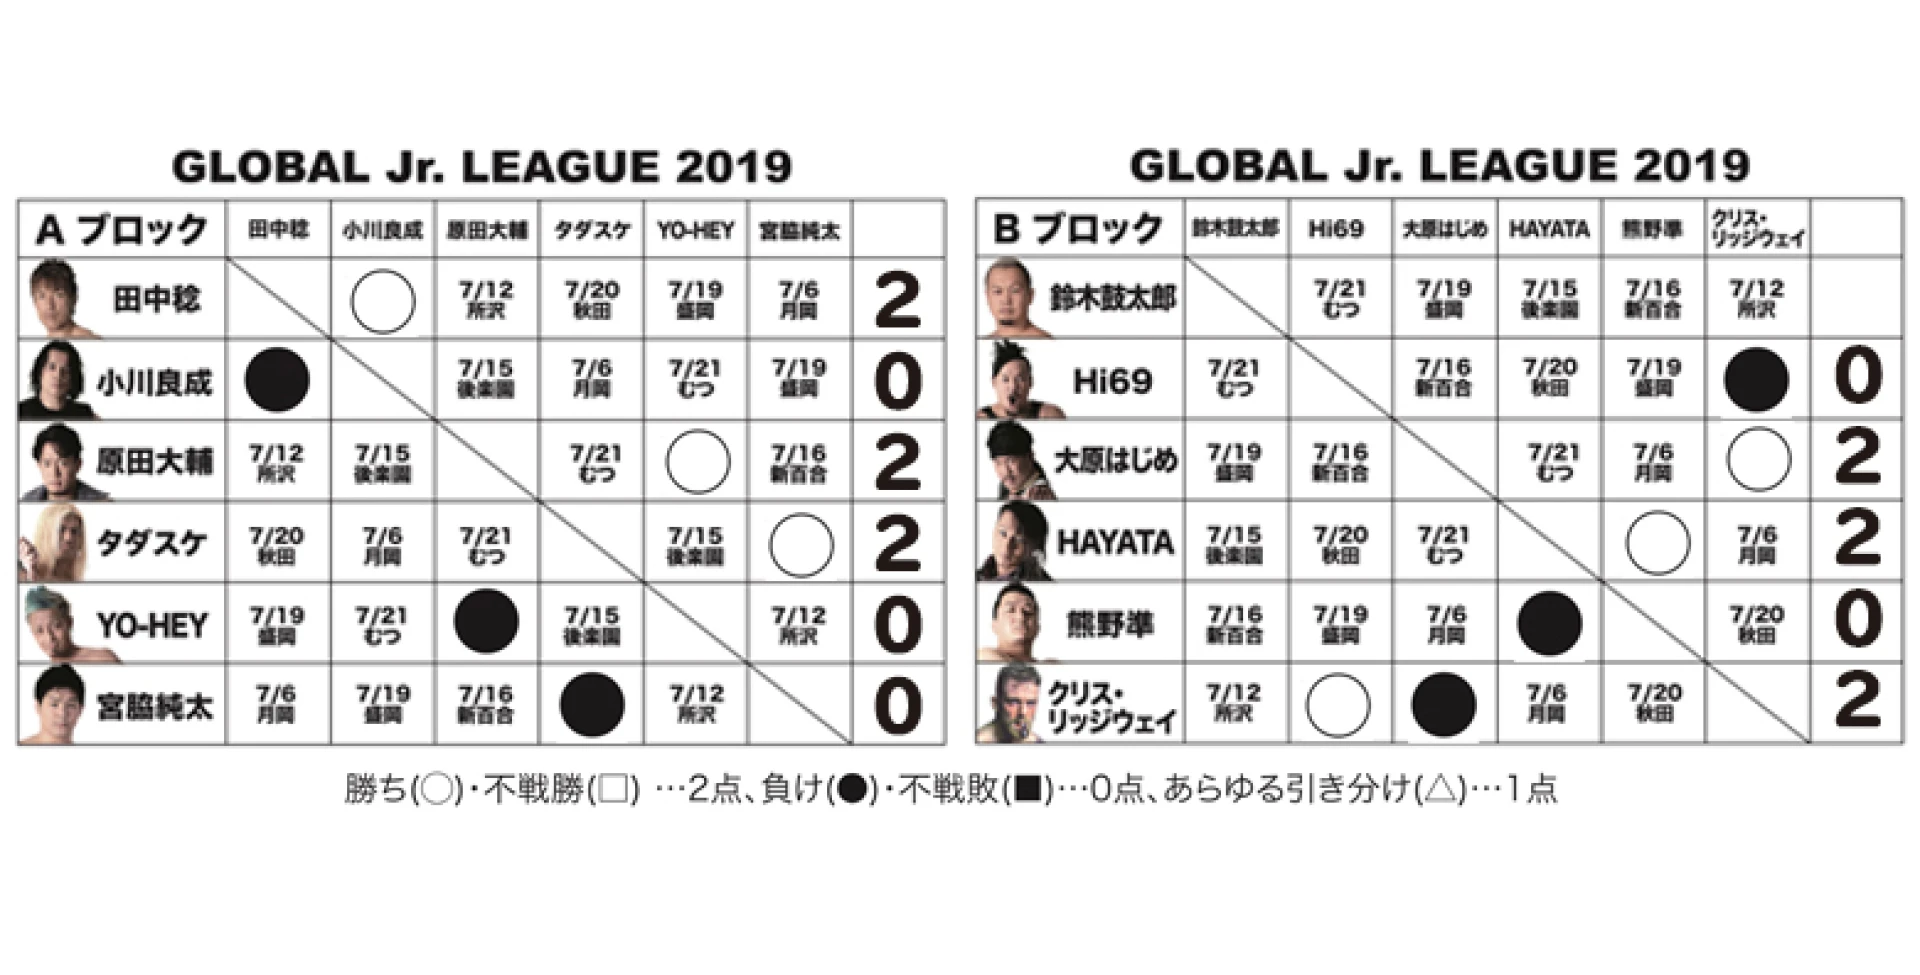 【6.29島田大会終了時の得点状況】『GLOBAL Jr. LEAGUE 2019』得点表